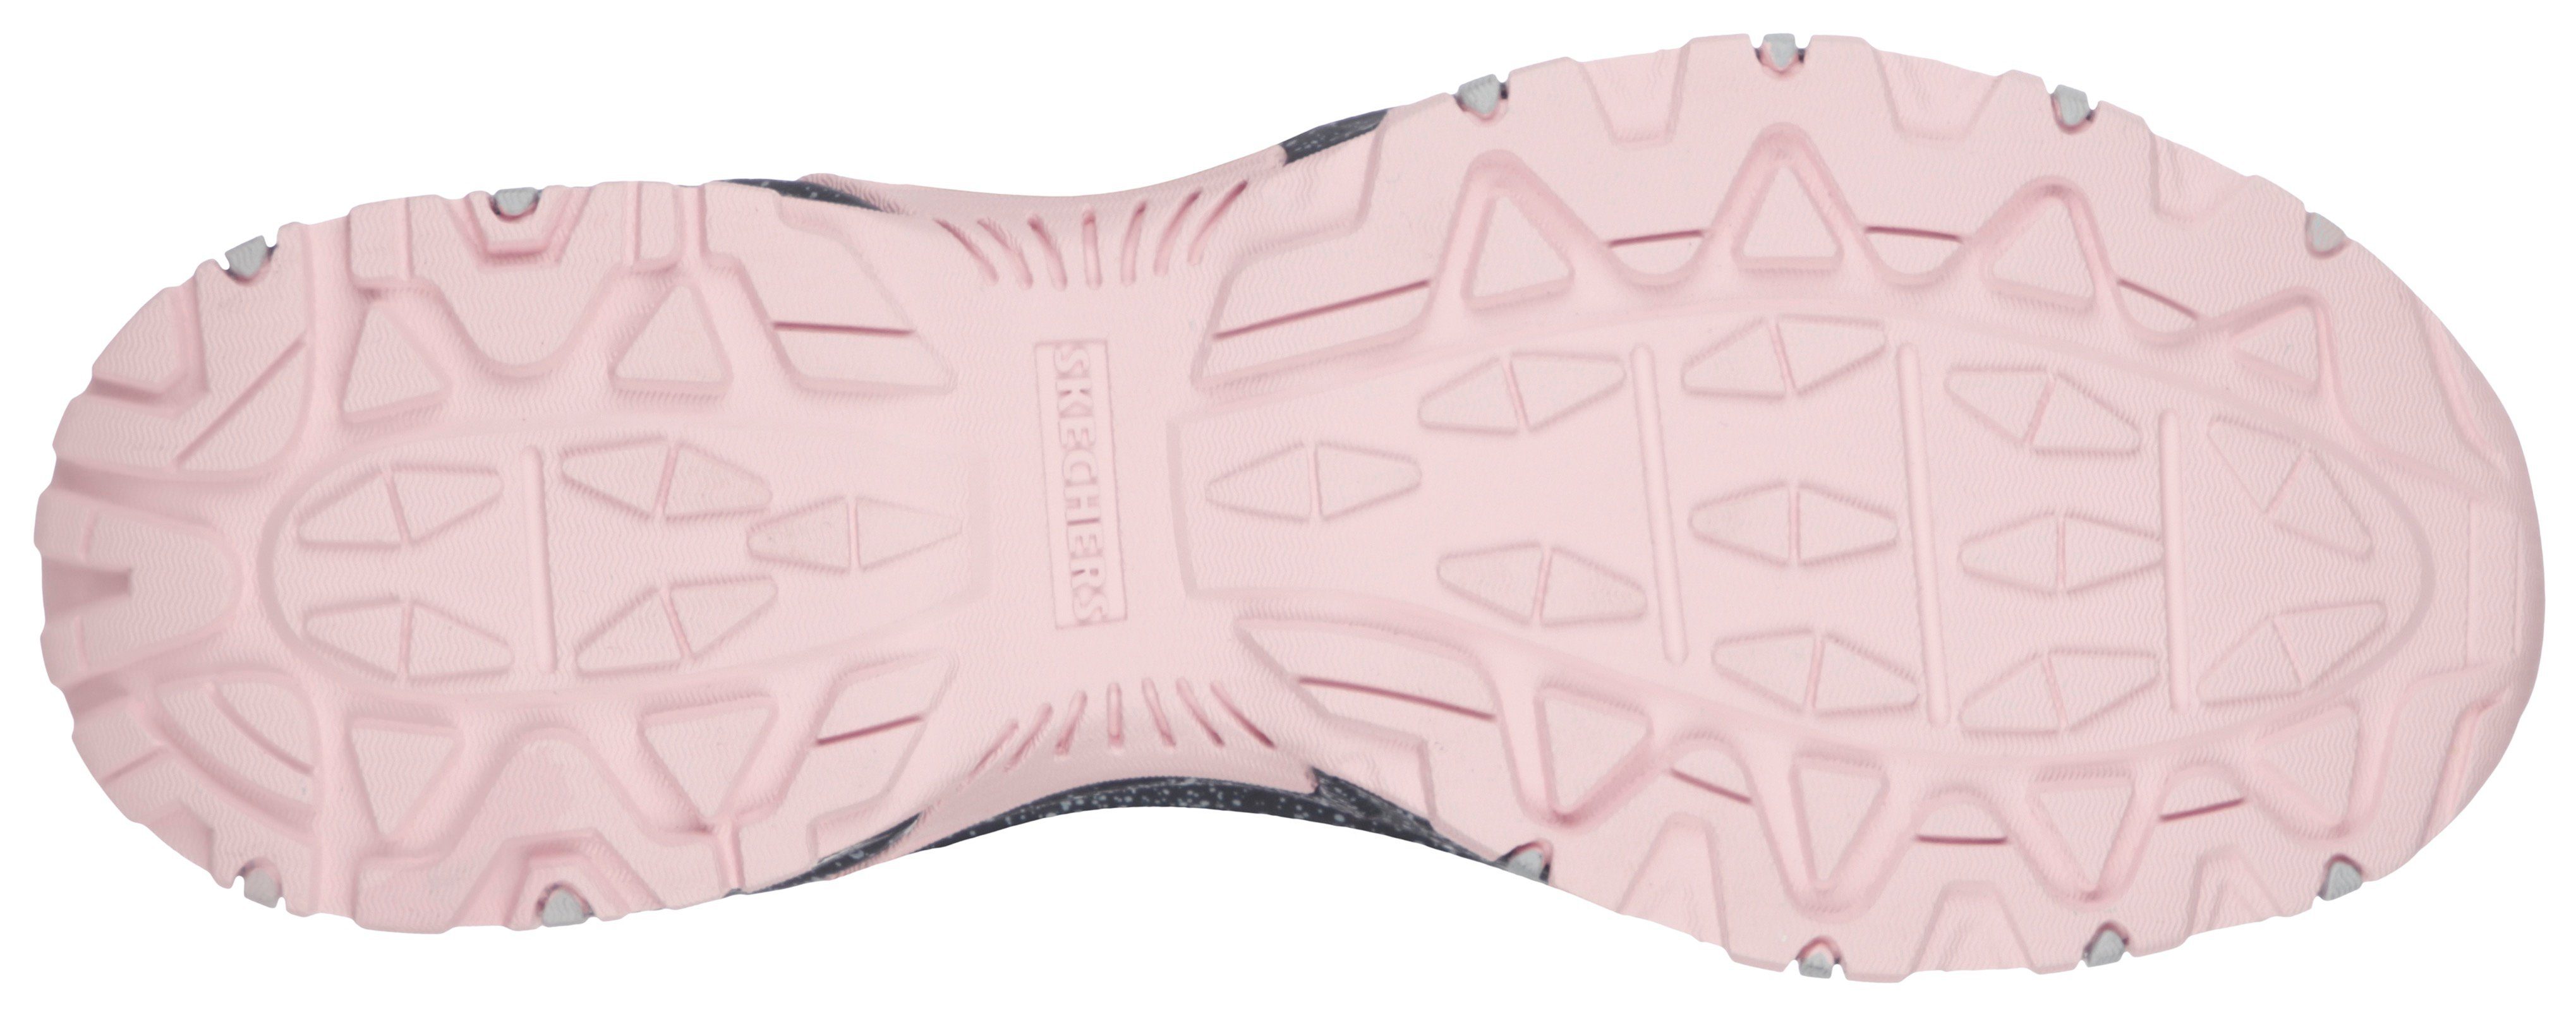 Skechers HILLCREST PURE im ESCAPADE Sneaker grau-pink Materialmix